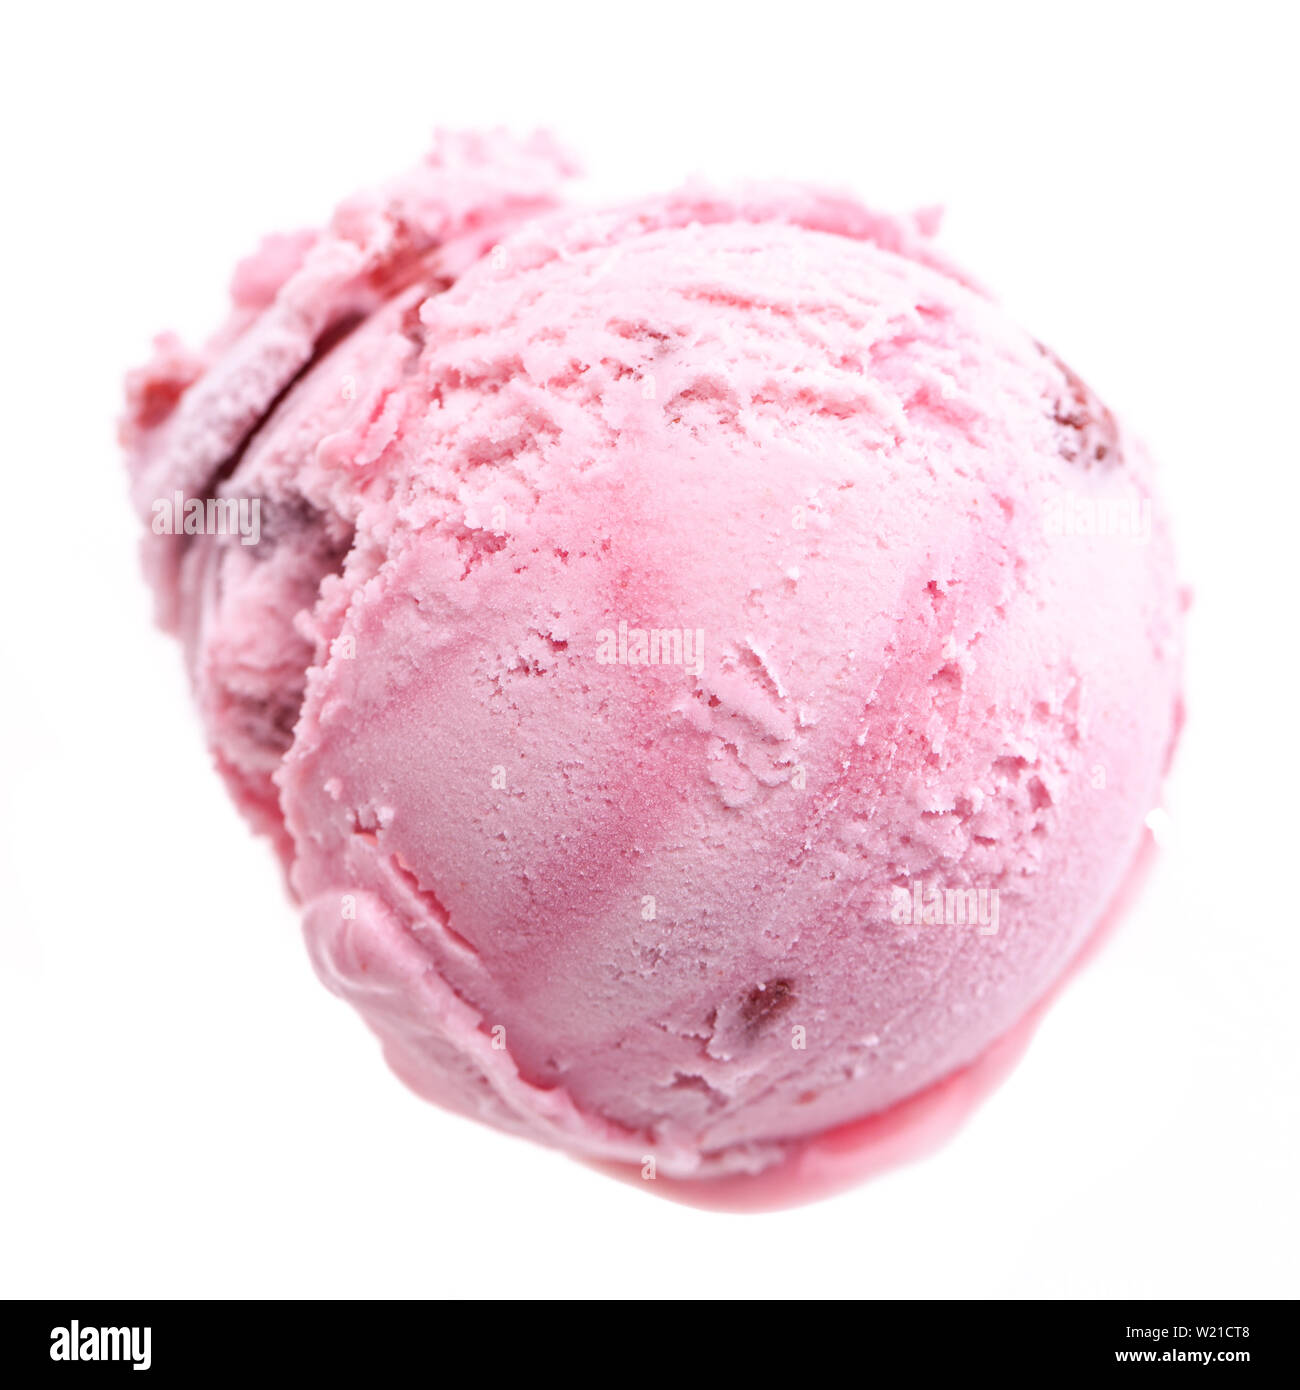 Scoop of pink ice cream stock image. Image of ball, icecream